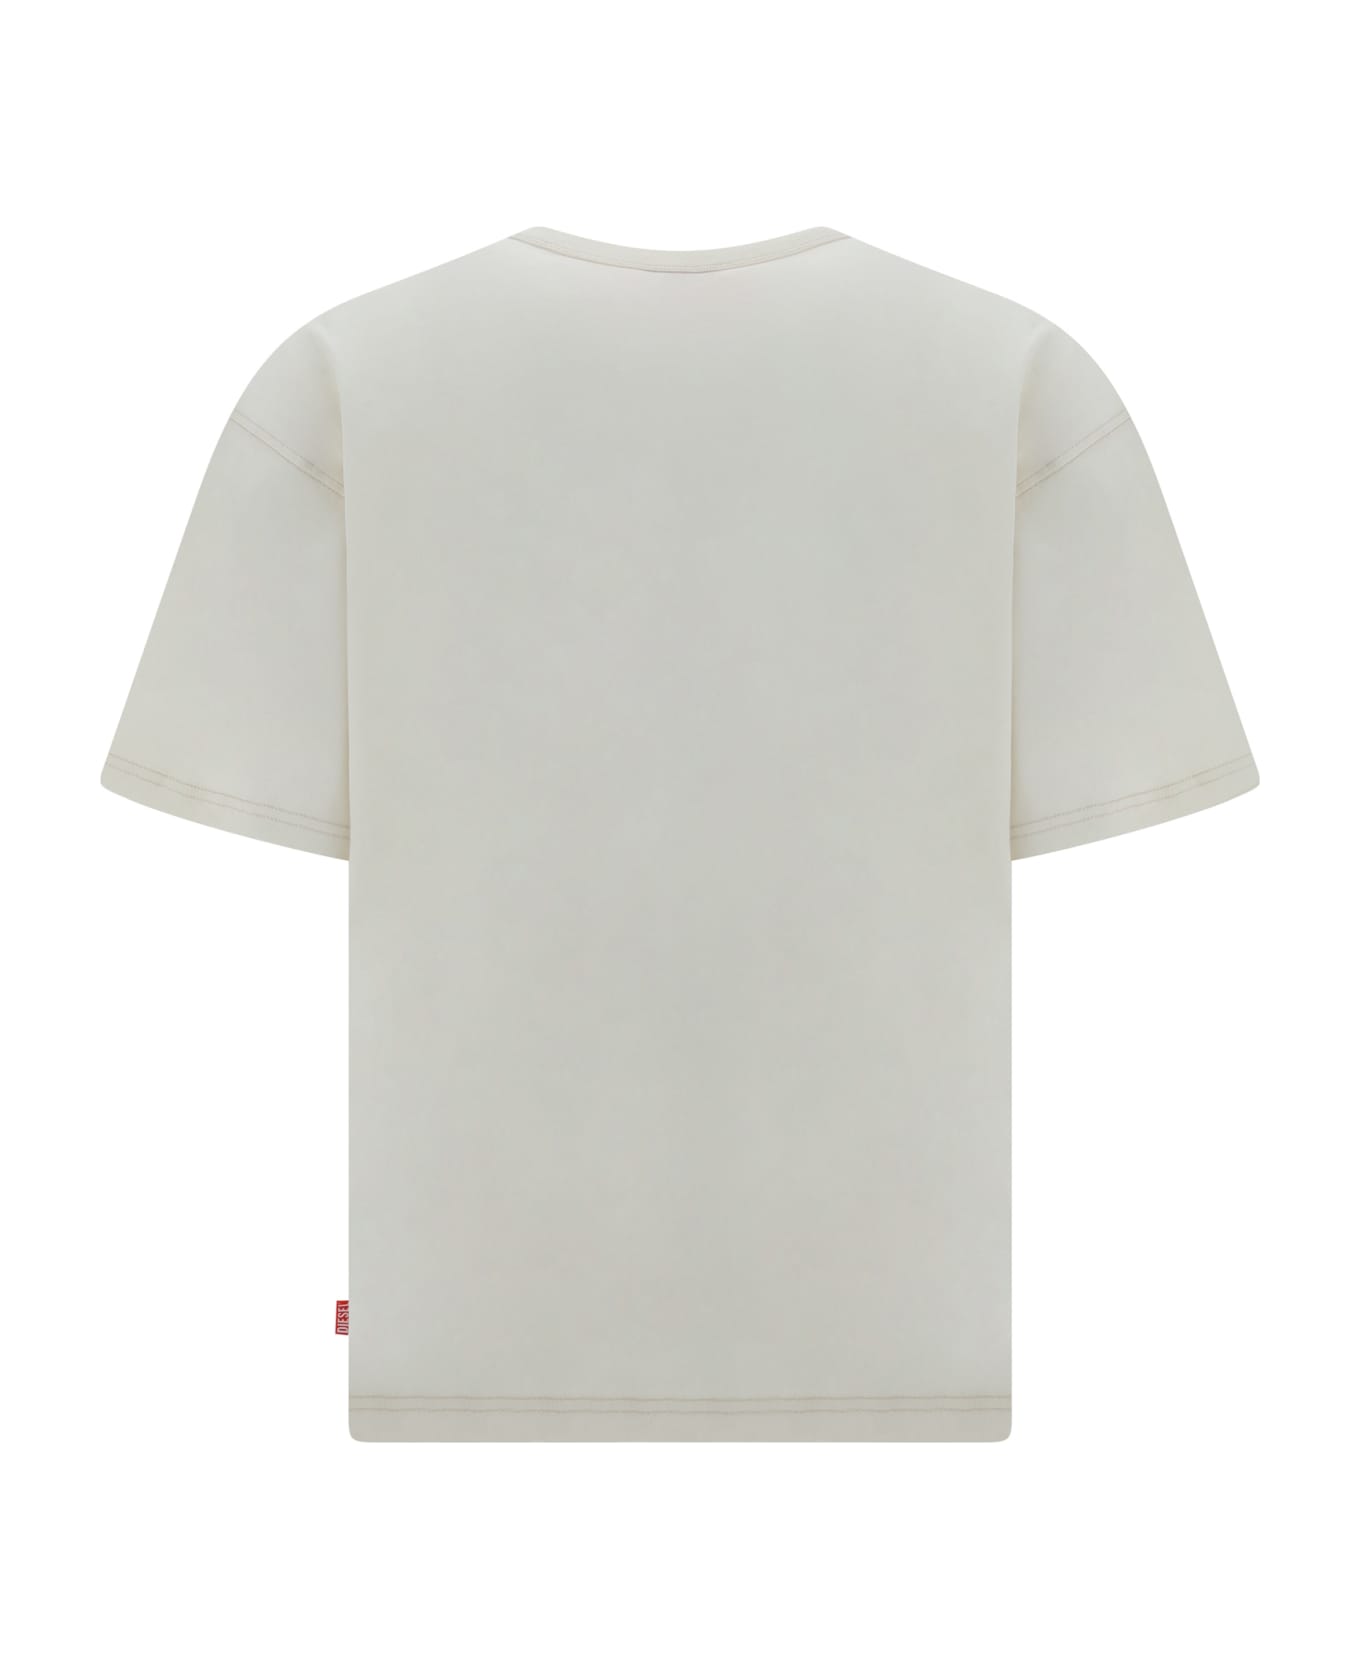 Diesel T-shirt - Medium/white